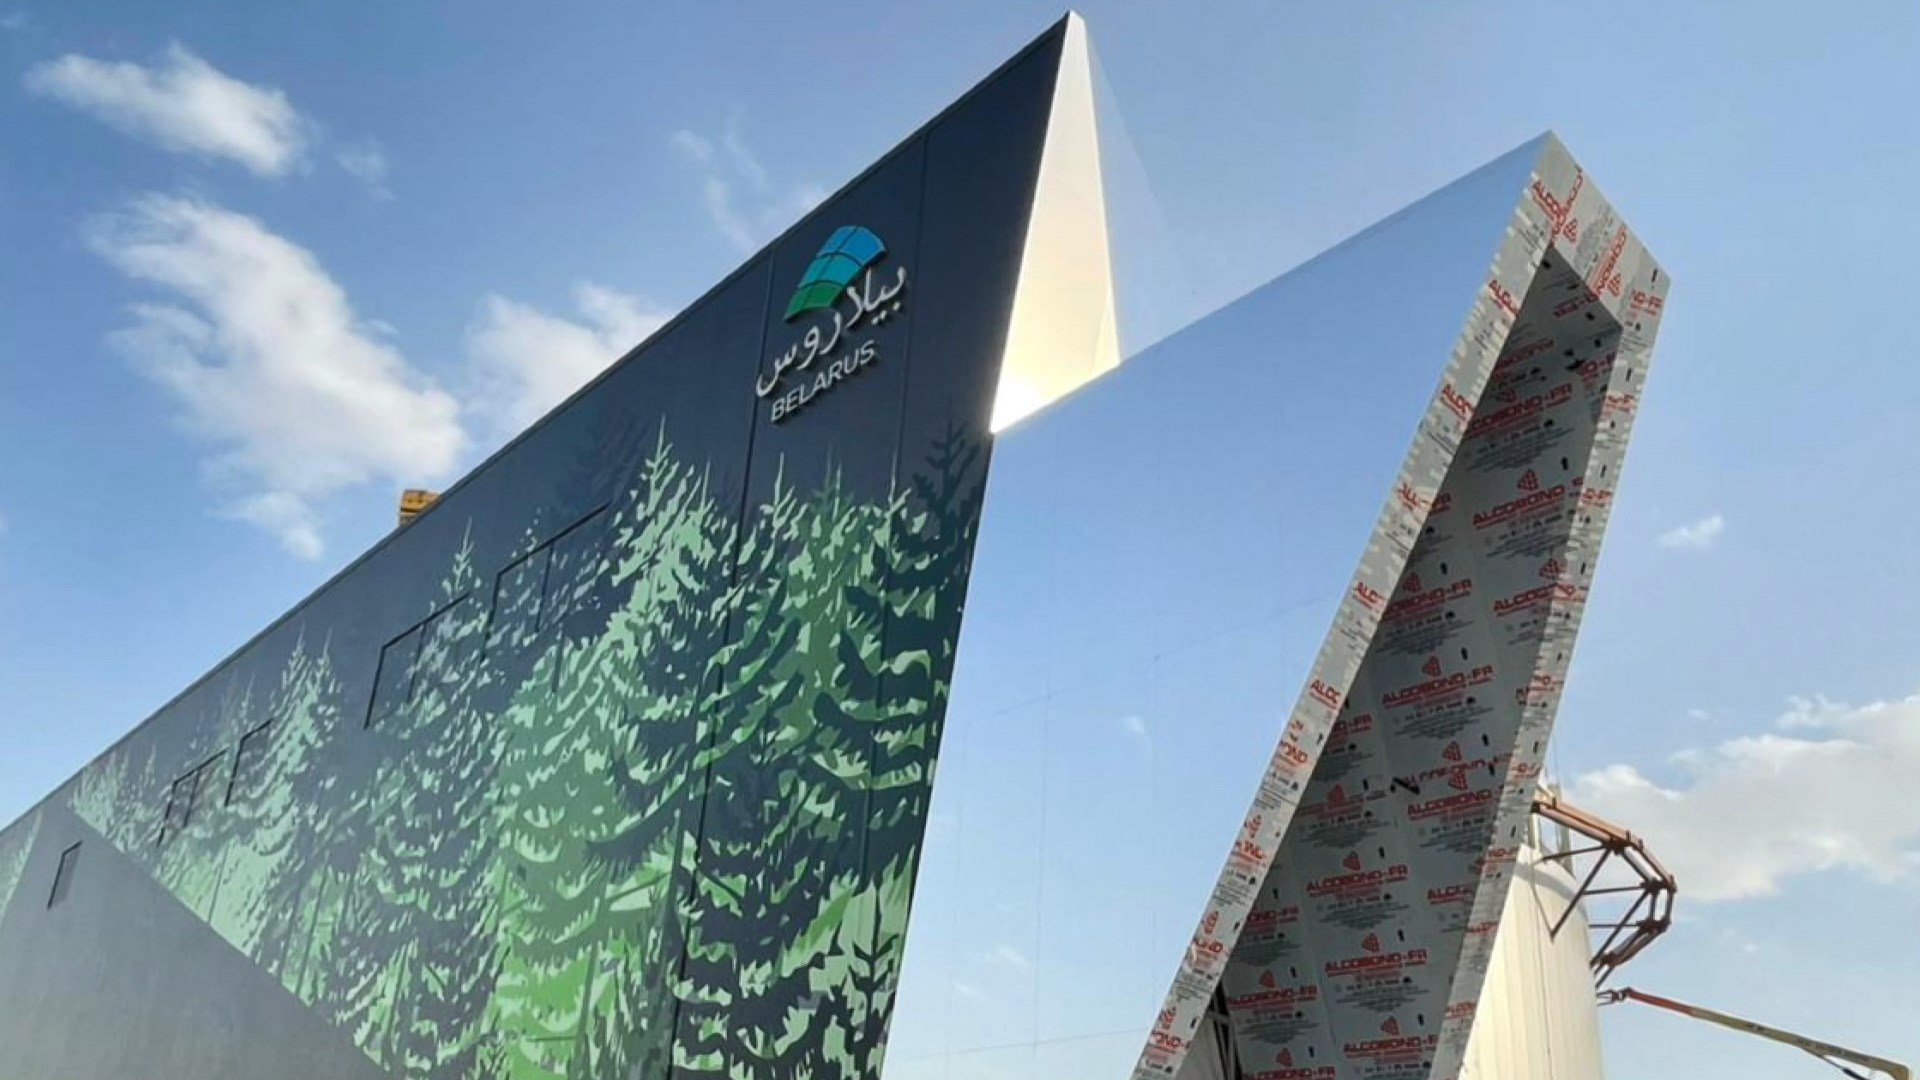 Belarusian pavilion in Dubai themed around "Forest of Future Technologies"